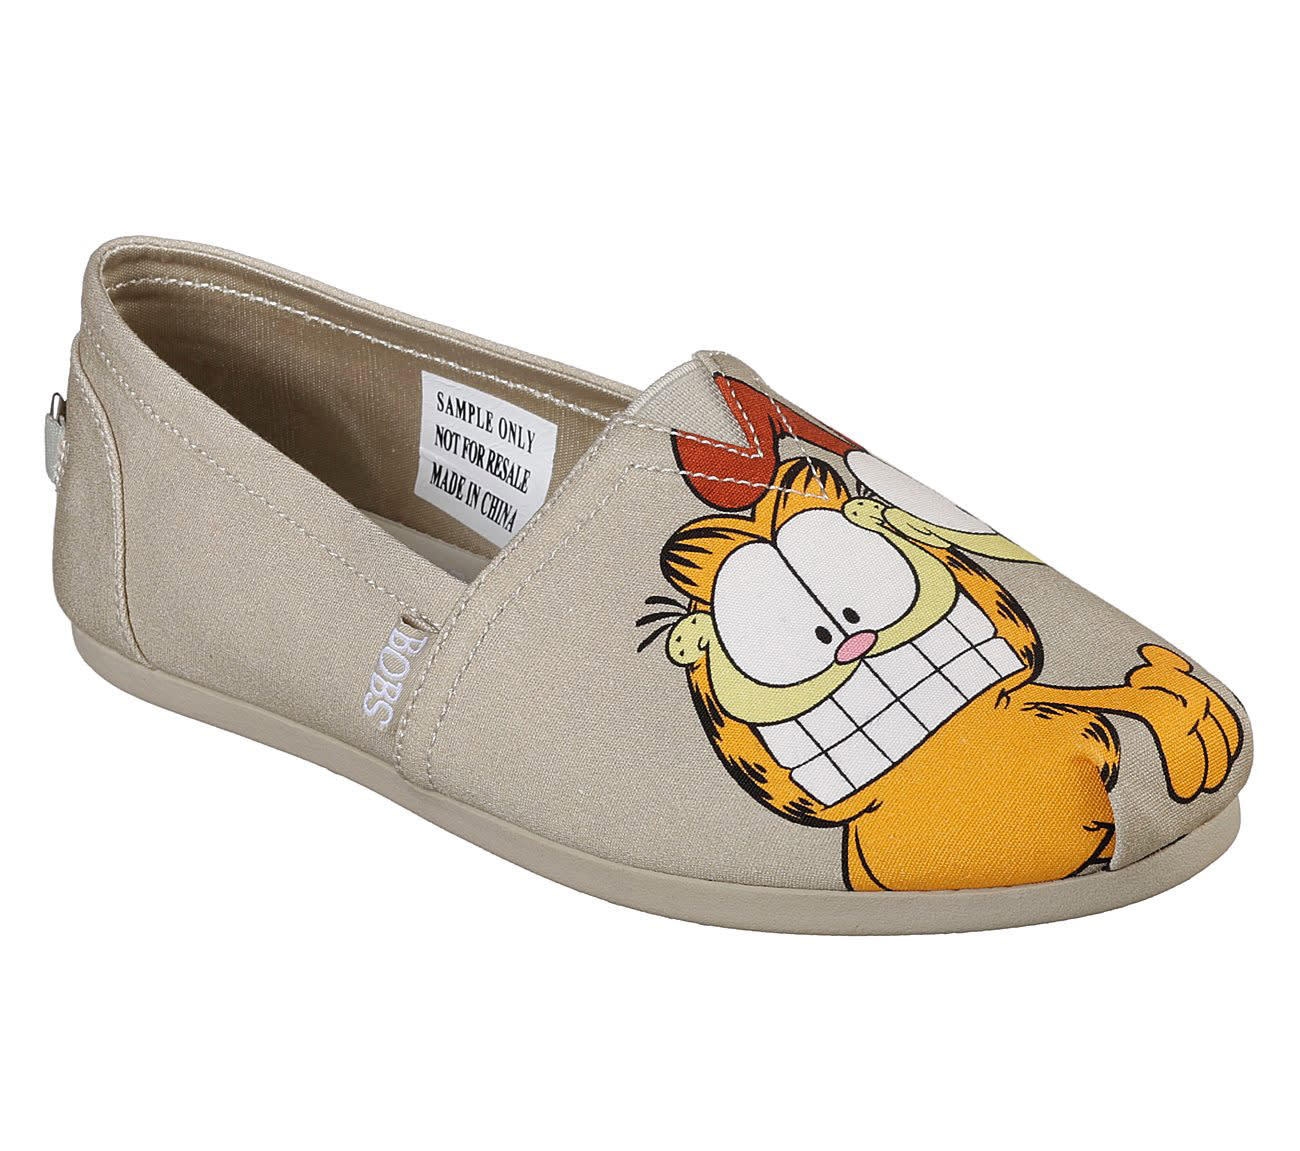 Garfield lands new Skechers collection